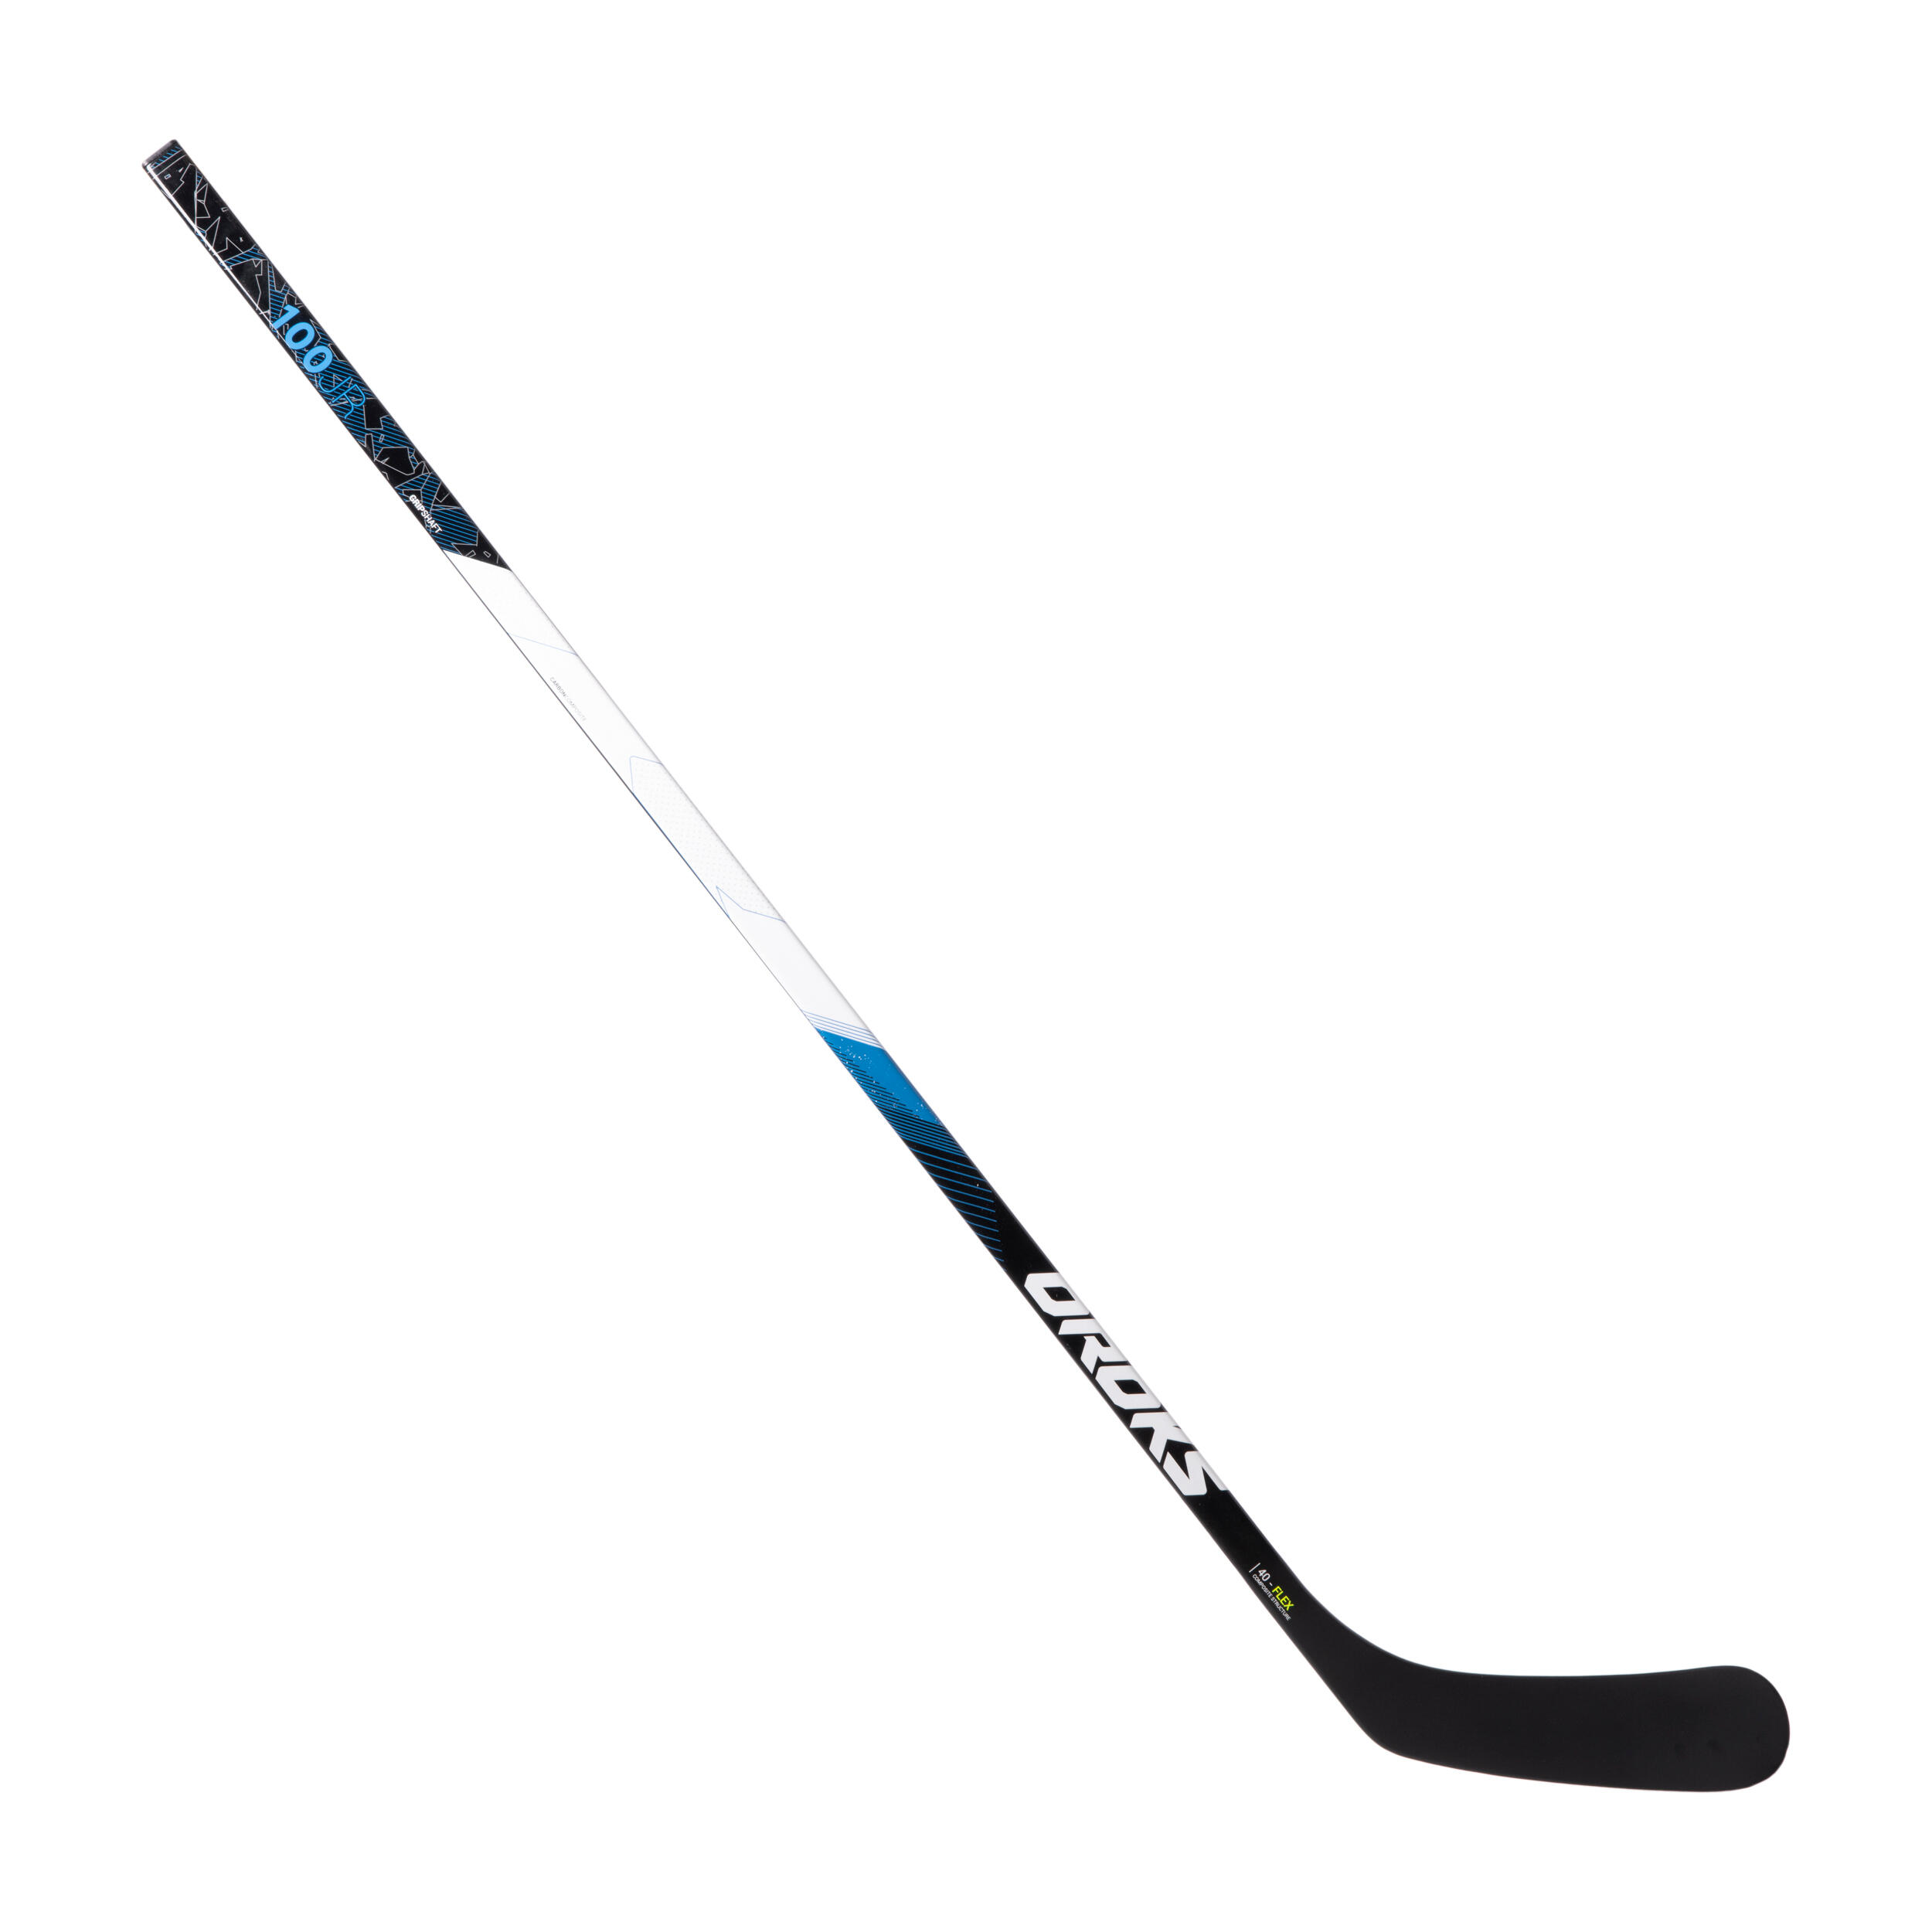 Kids' Right-Handed Hockey Stick - IH 100 - OROKS